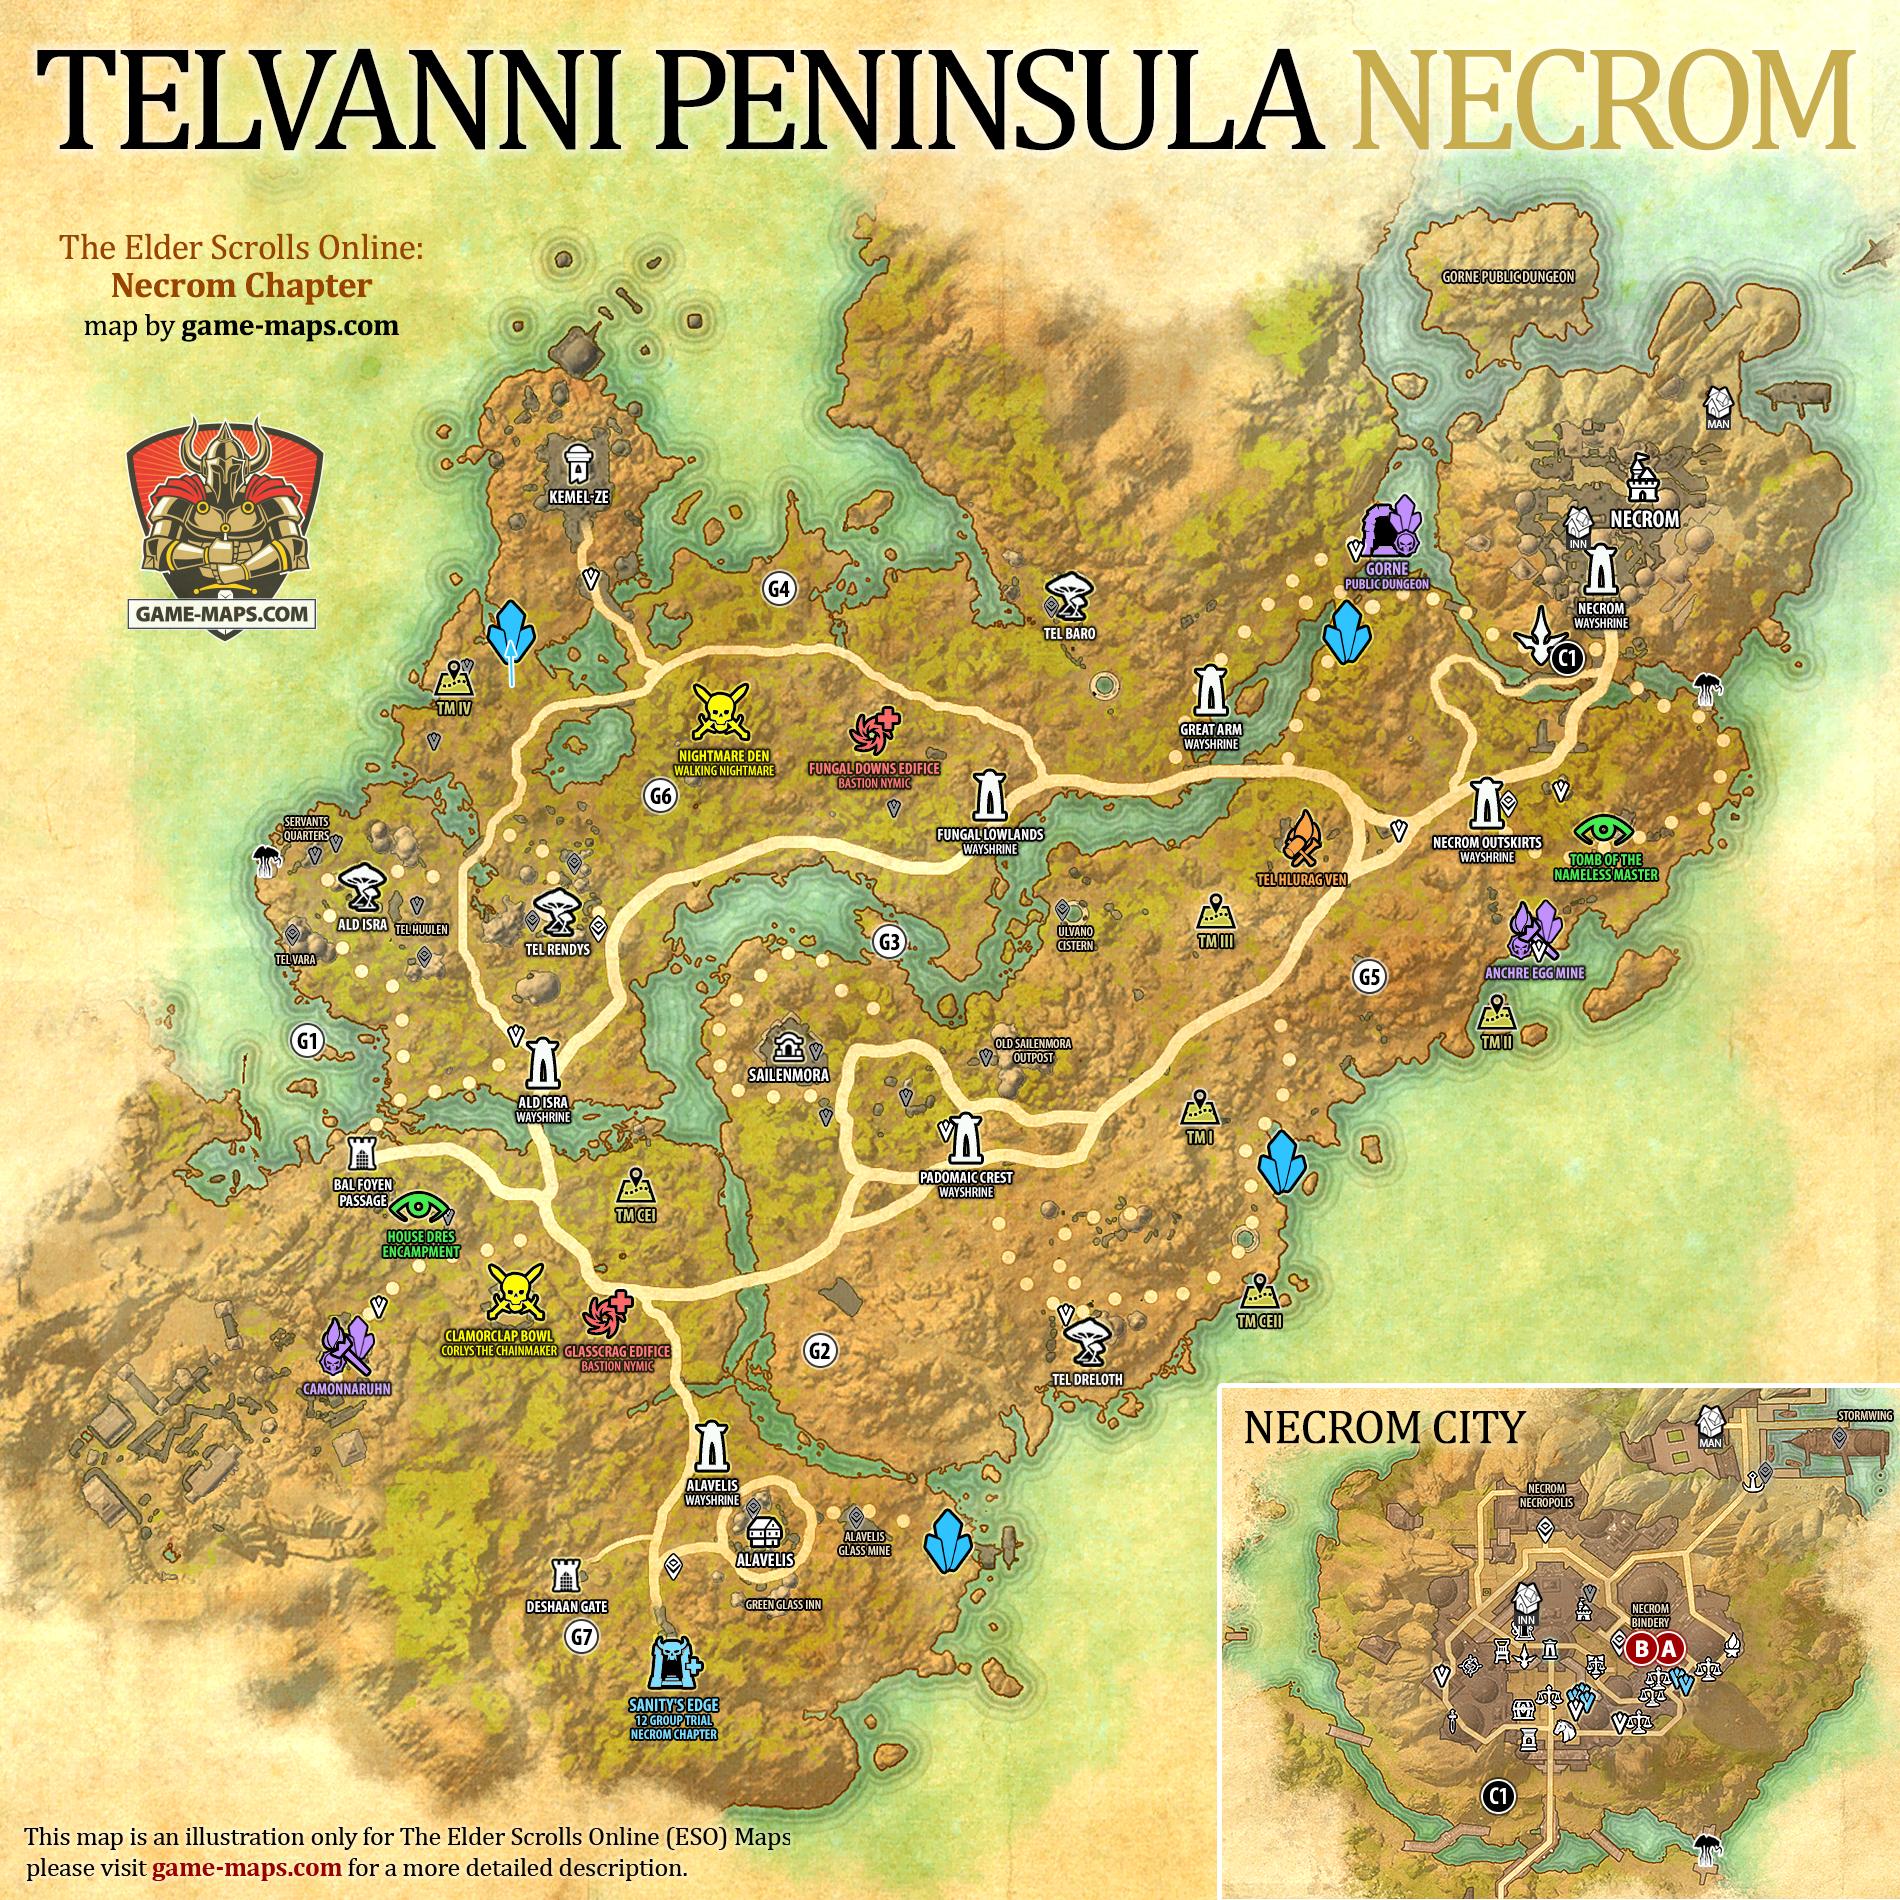 Telvanni Peninsula (Necrom) Map Elder Scrolls Online ESO